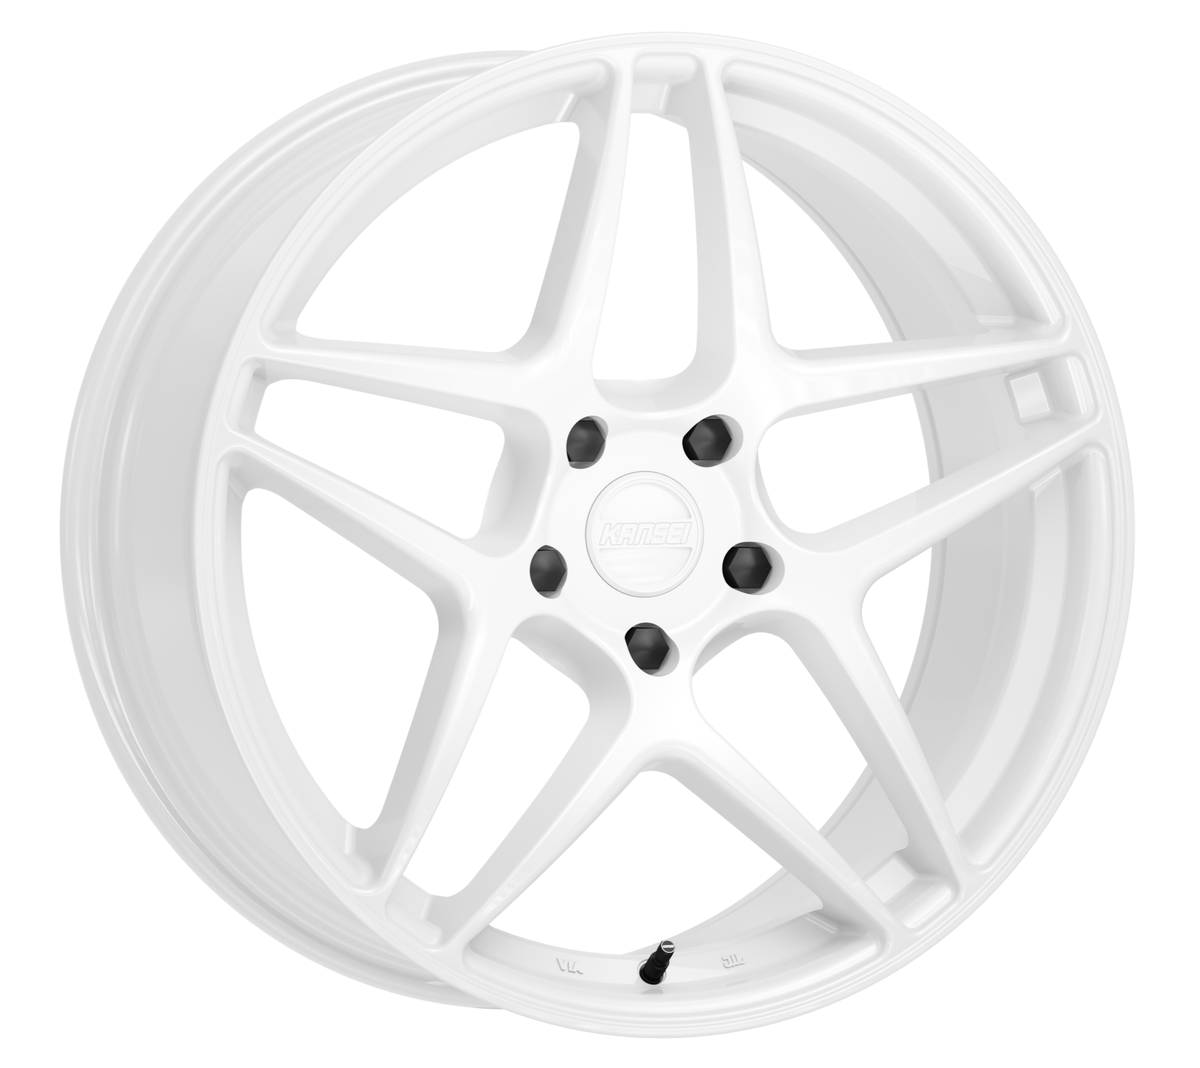 K15W ASTRO Wheel, Size: 19" x 8.50", Bolt Pattern: 5 x 114.300 mm, Backspace: 6.13" [Finish: Gloss White]